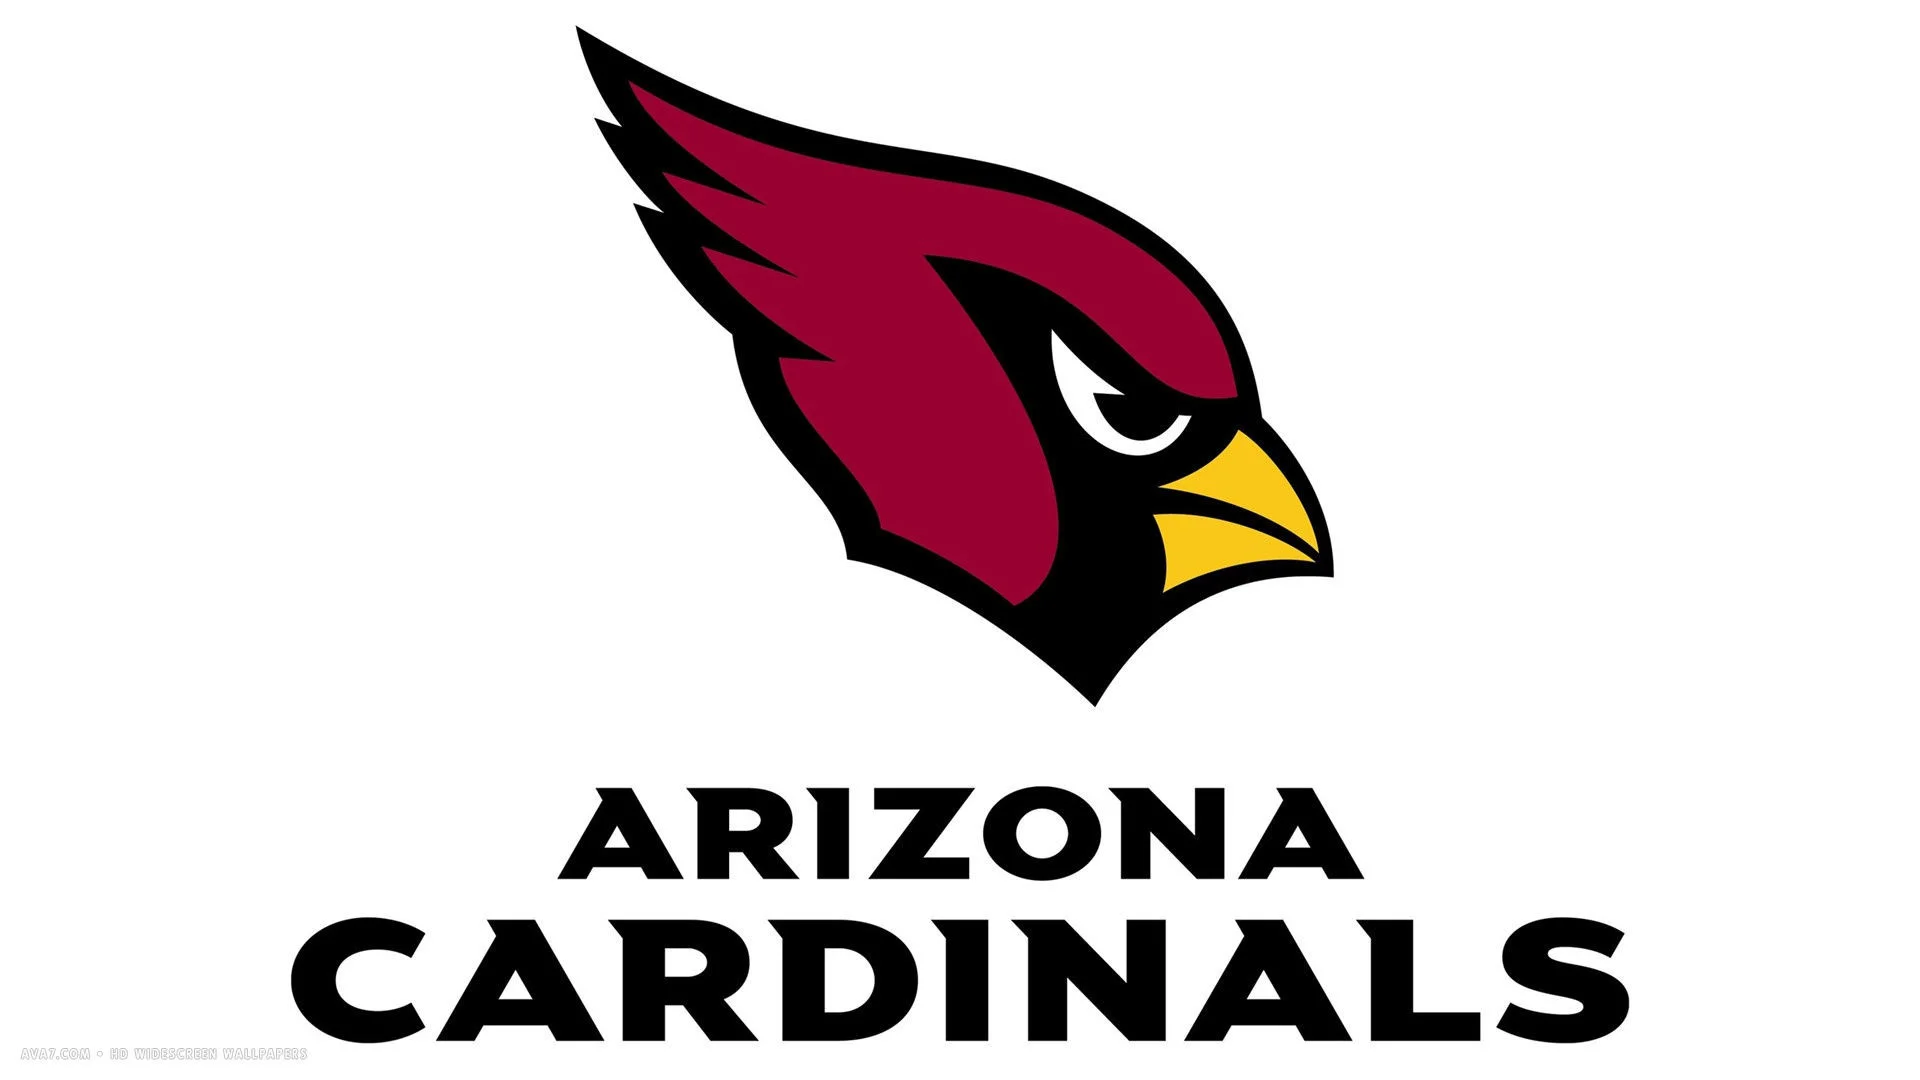 Arizona cardinals nfl football team hd widescreen wallpaper